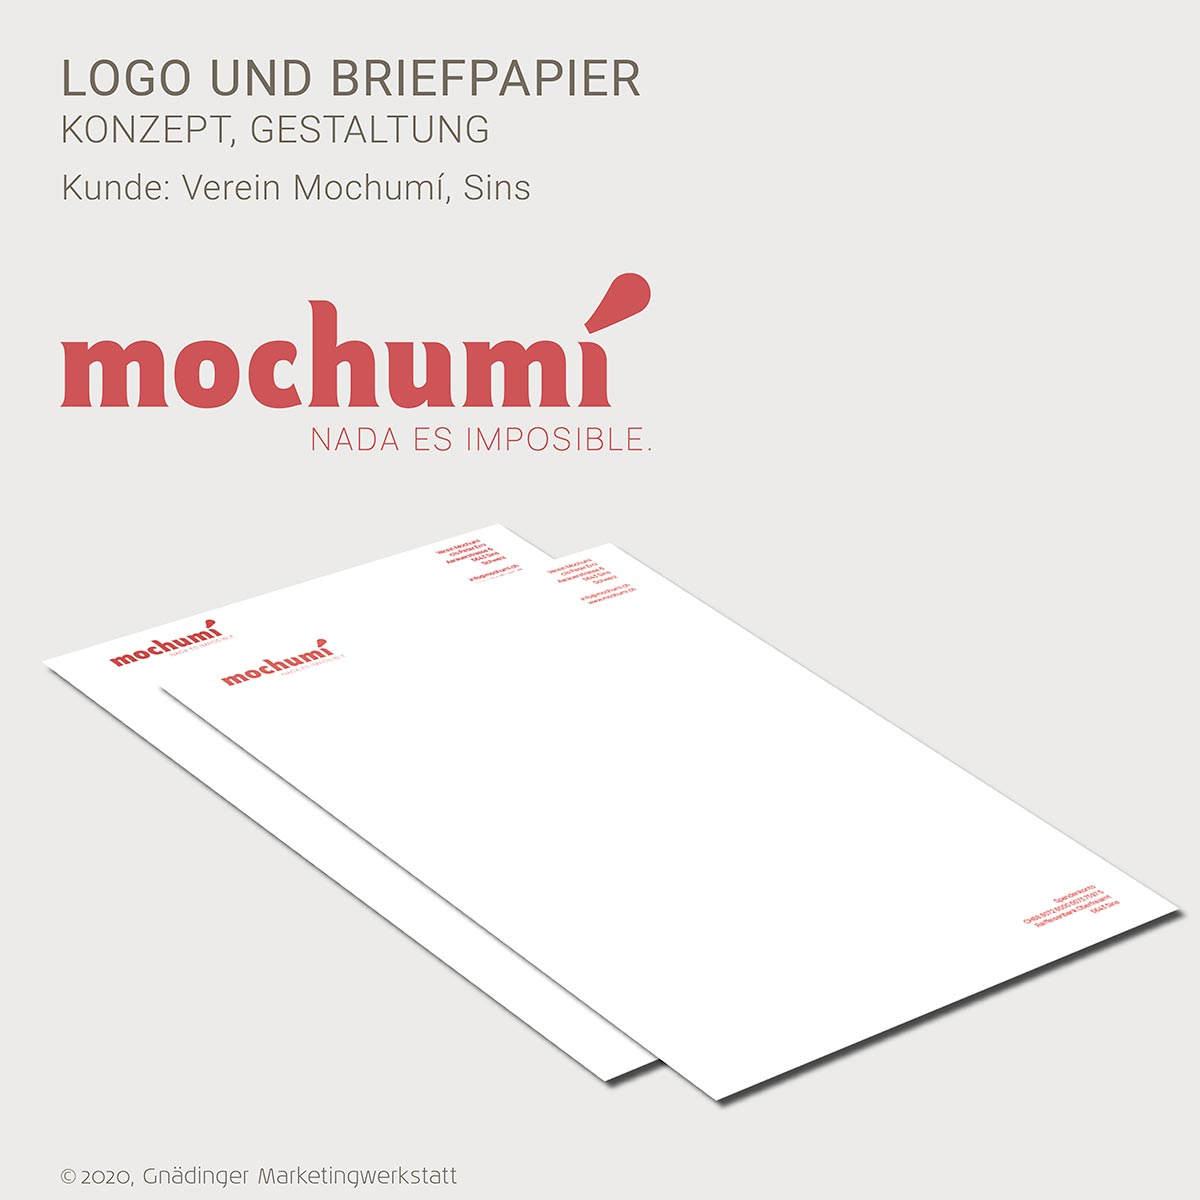 WEB1_GMW_Projekt_Mochumi-Verein_Logo-Briefpapier_11-2020_1200x1200px_RGB